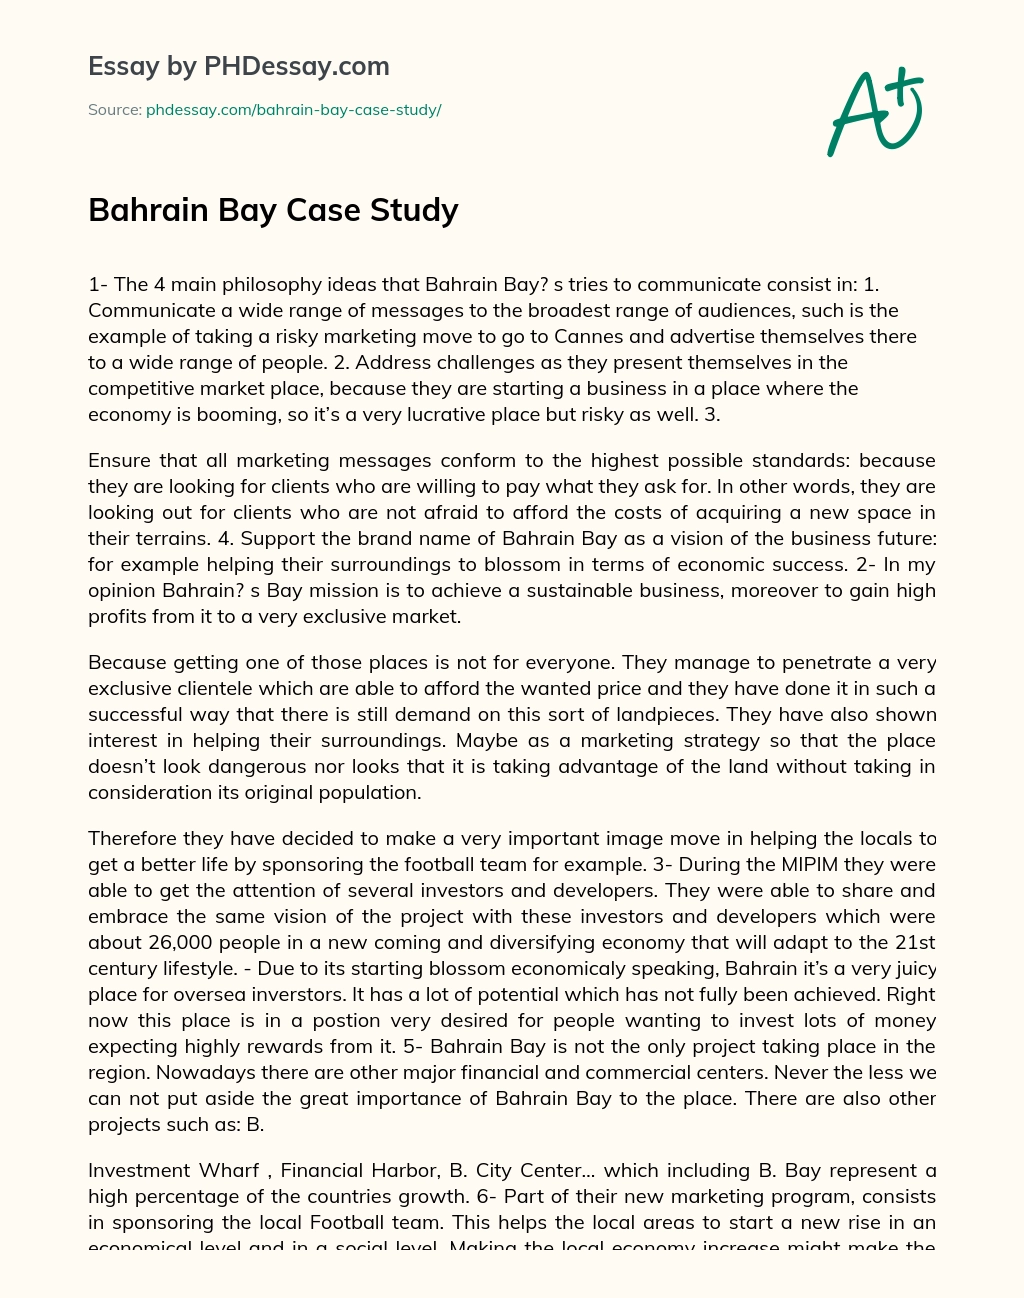 Bahrain Bay Case Study essay